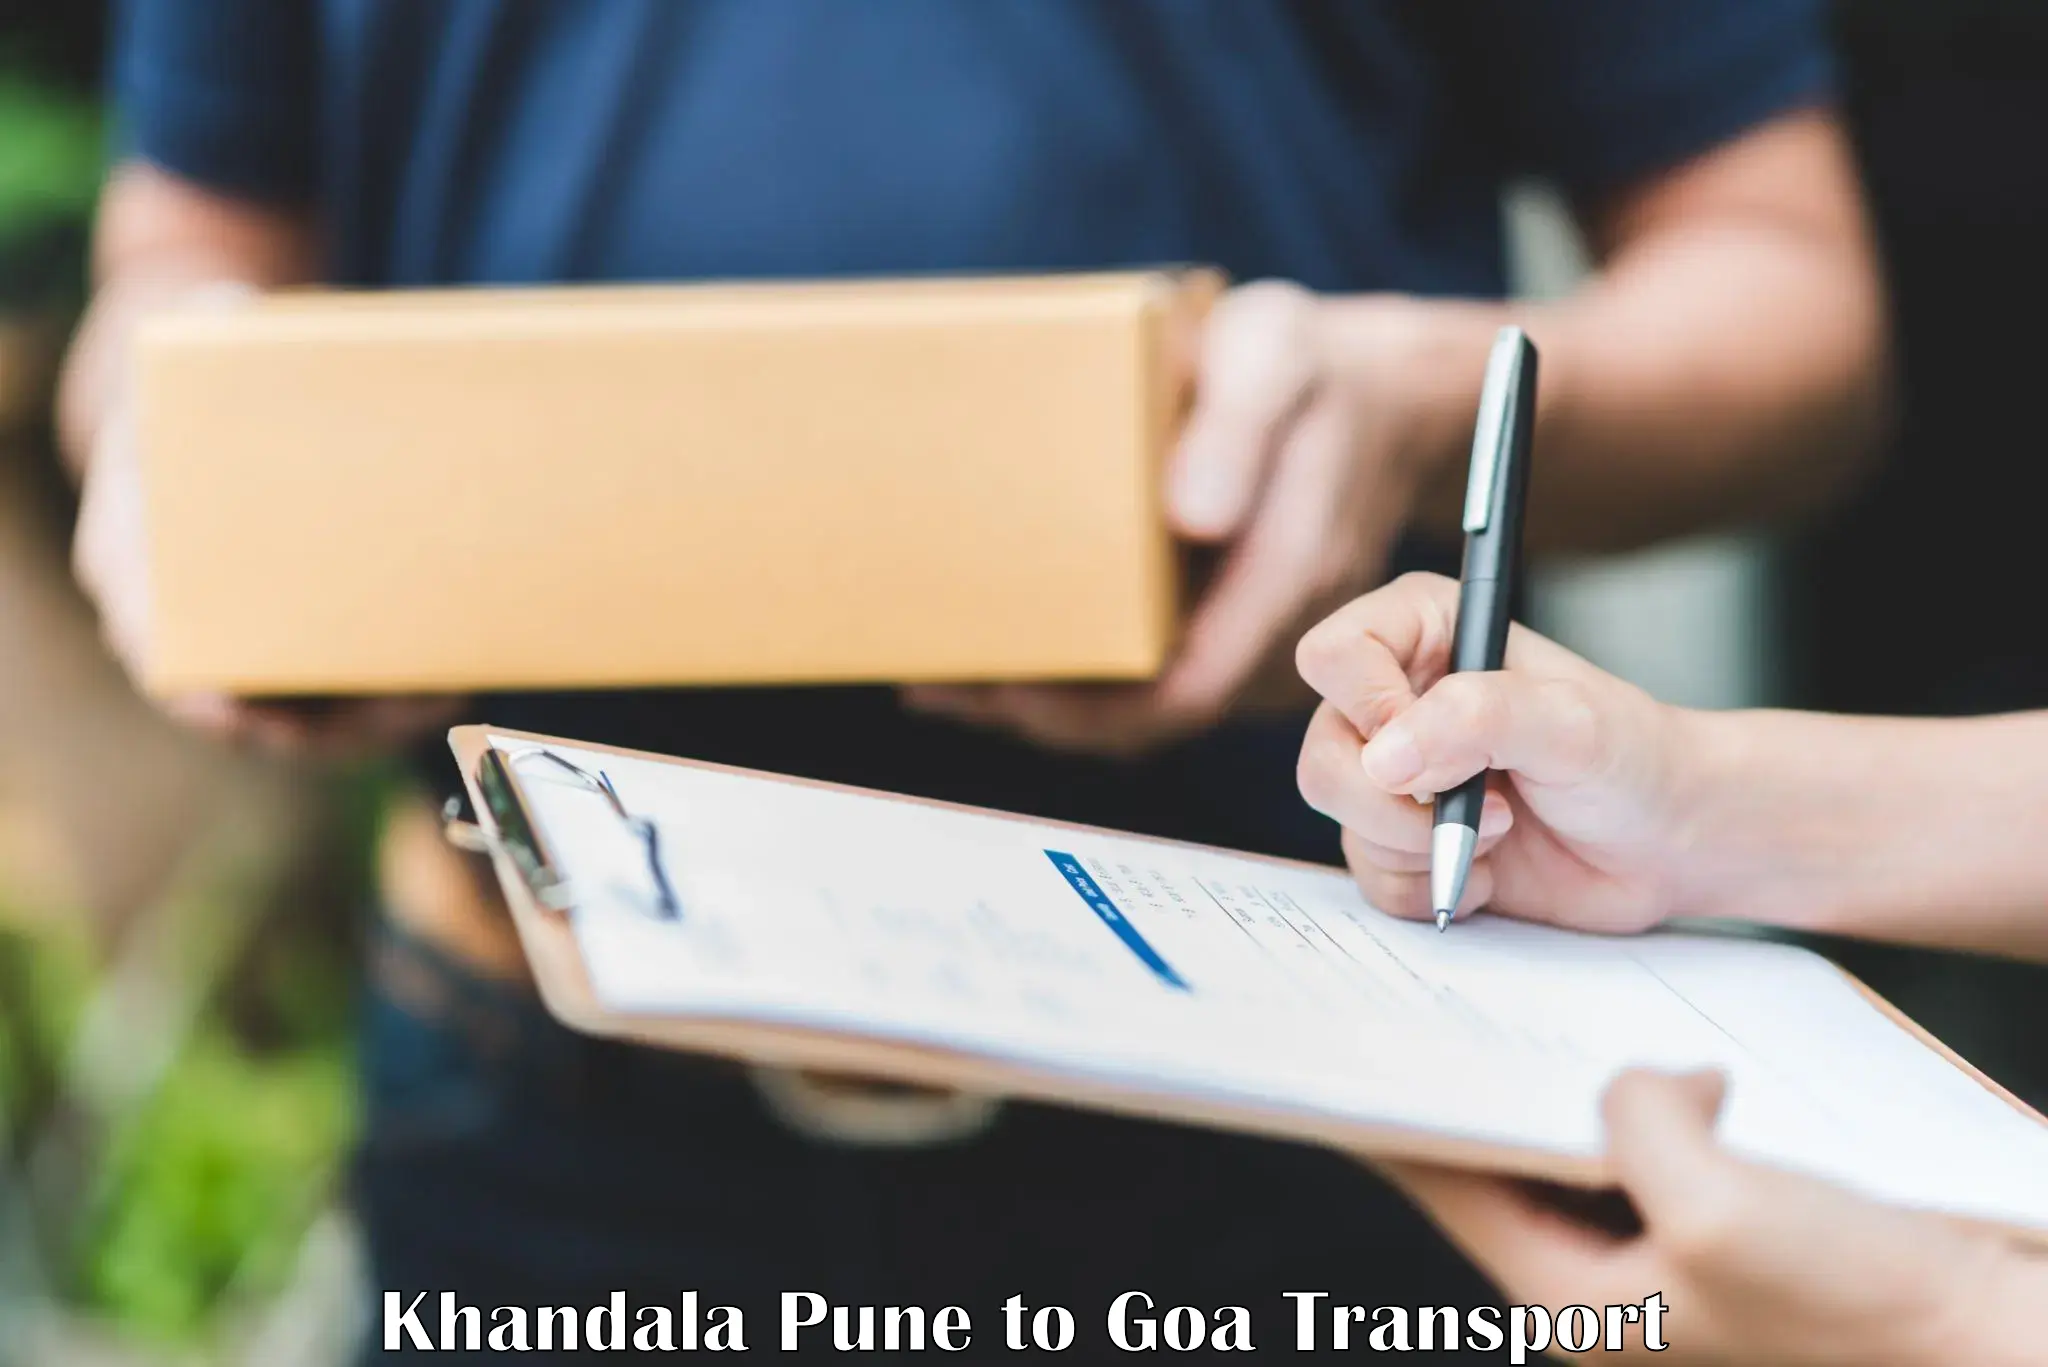 Furniture transport service Khandala Pune to Goa